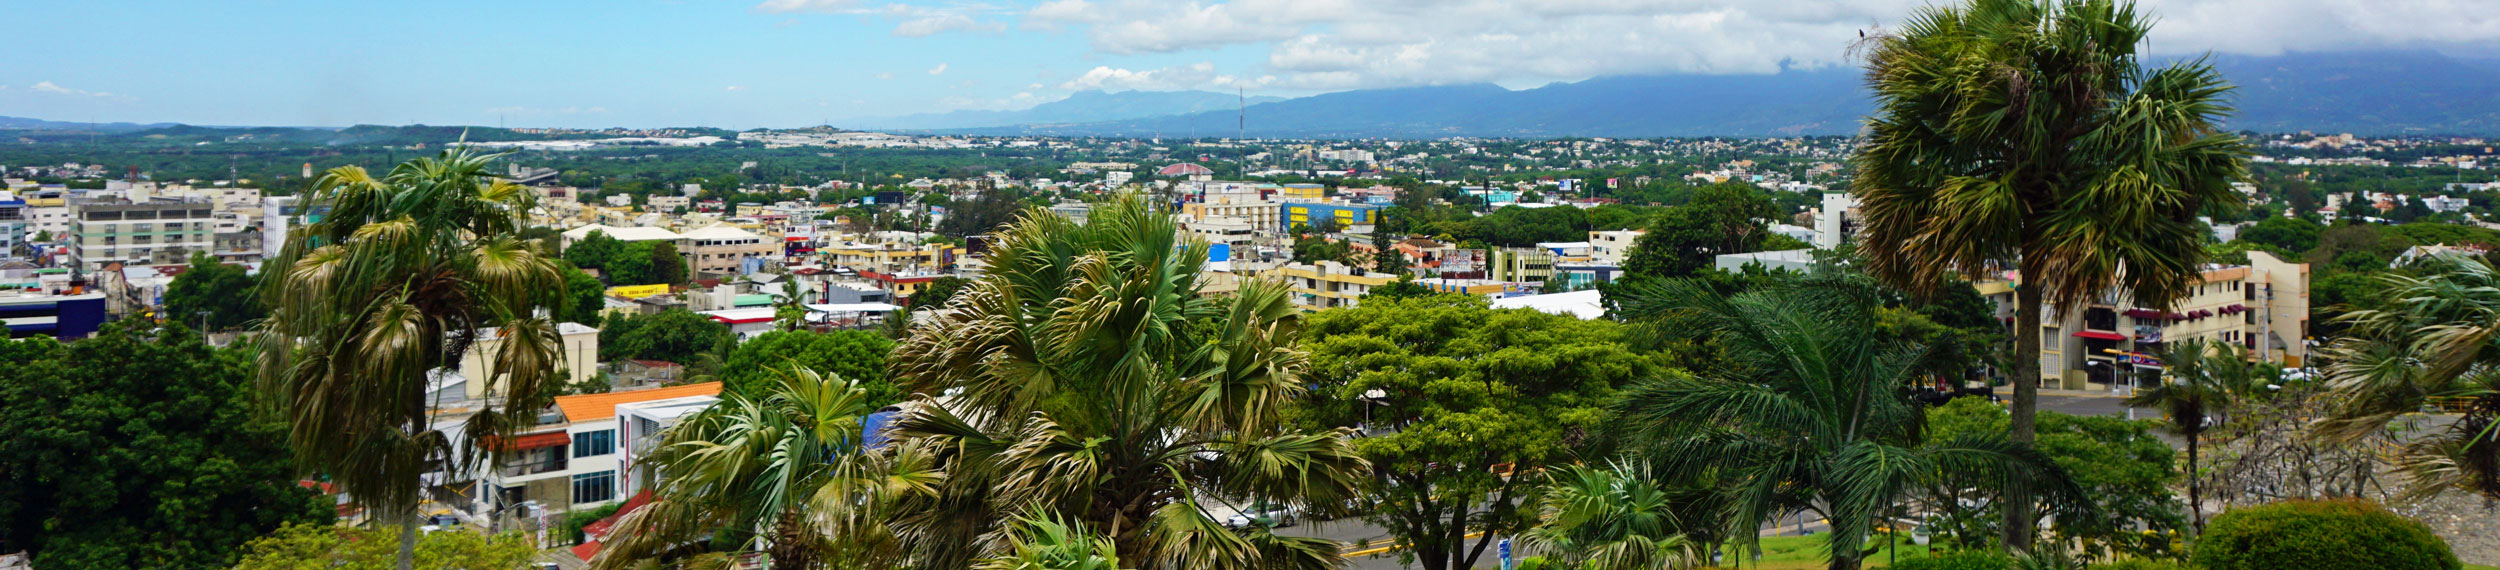 Aerial view of Santiago, Dominican Republic. 